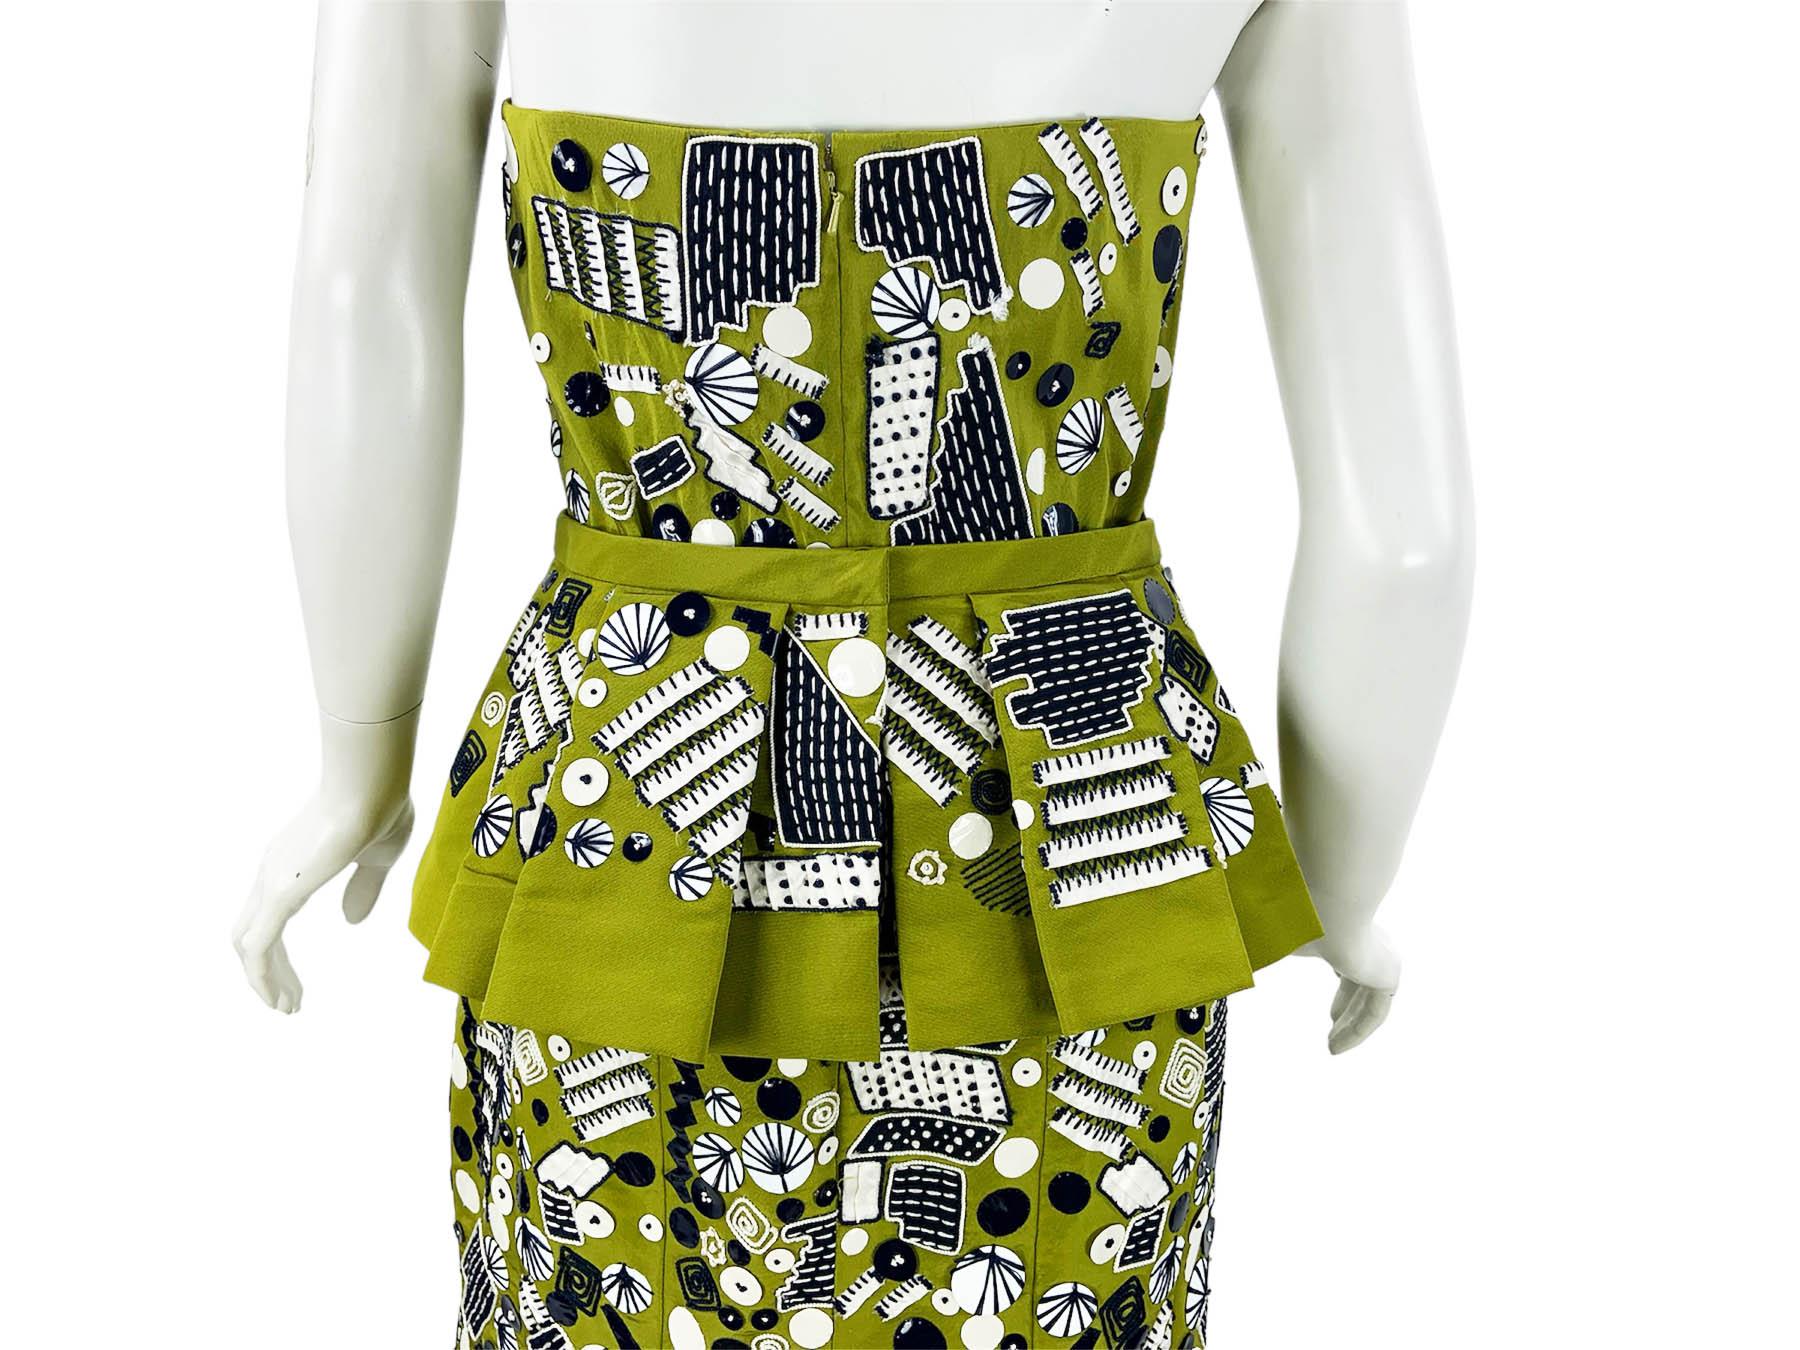 NWT Oscar de la Renta S/S 2009 Green Embellished Silk Taffeta Peplum Dress US 10 For Sale 8